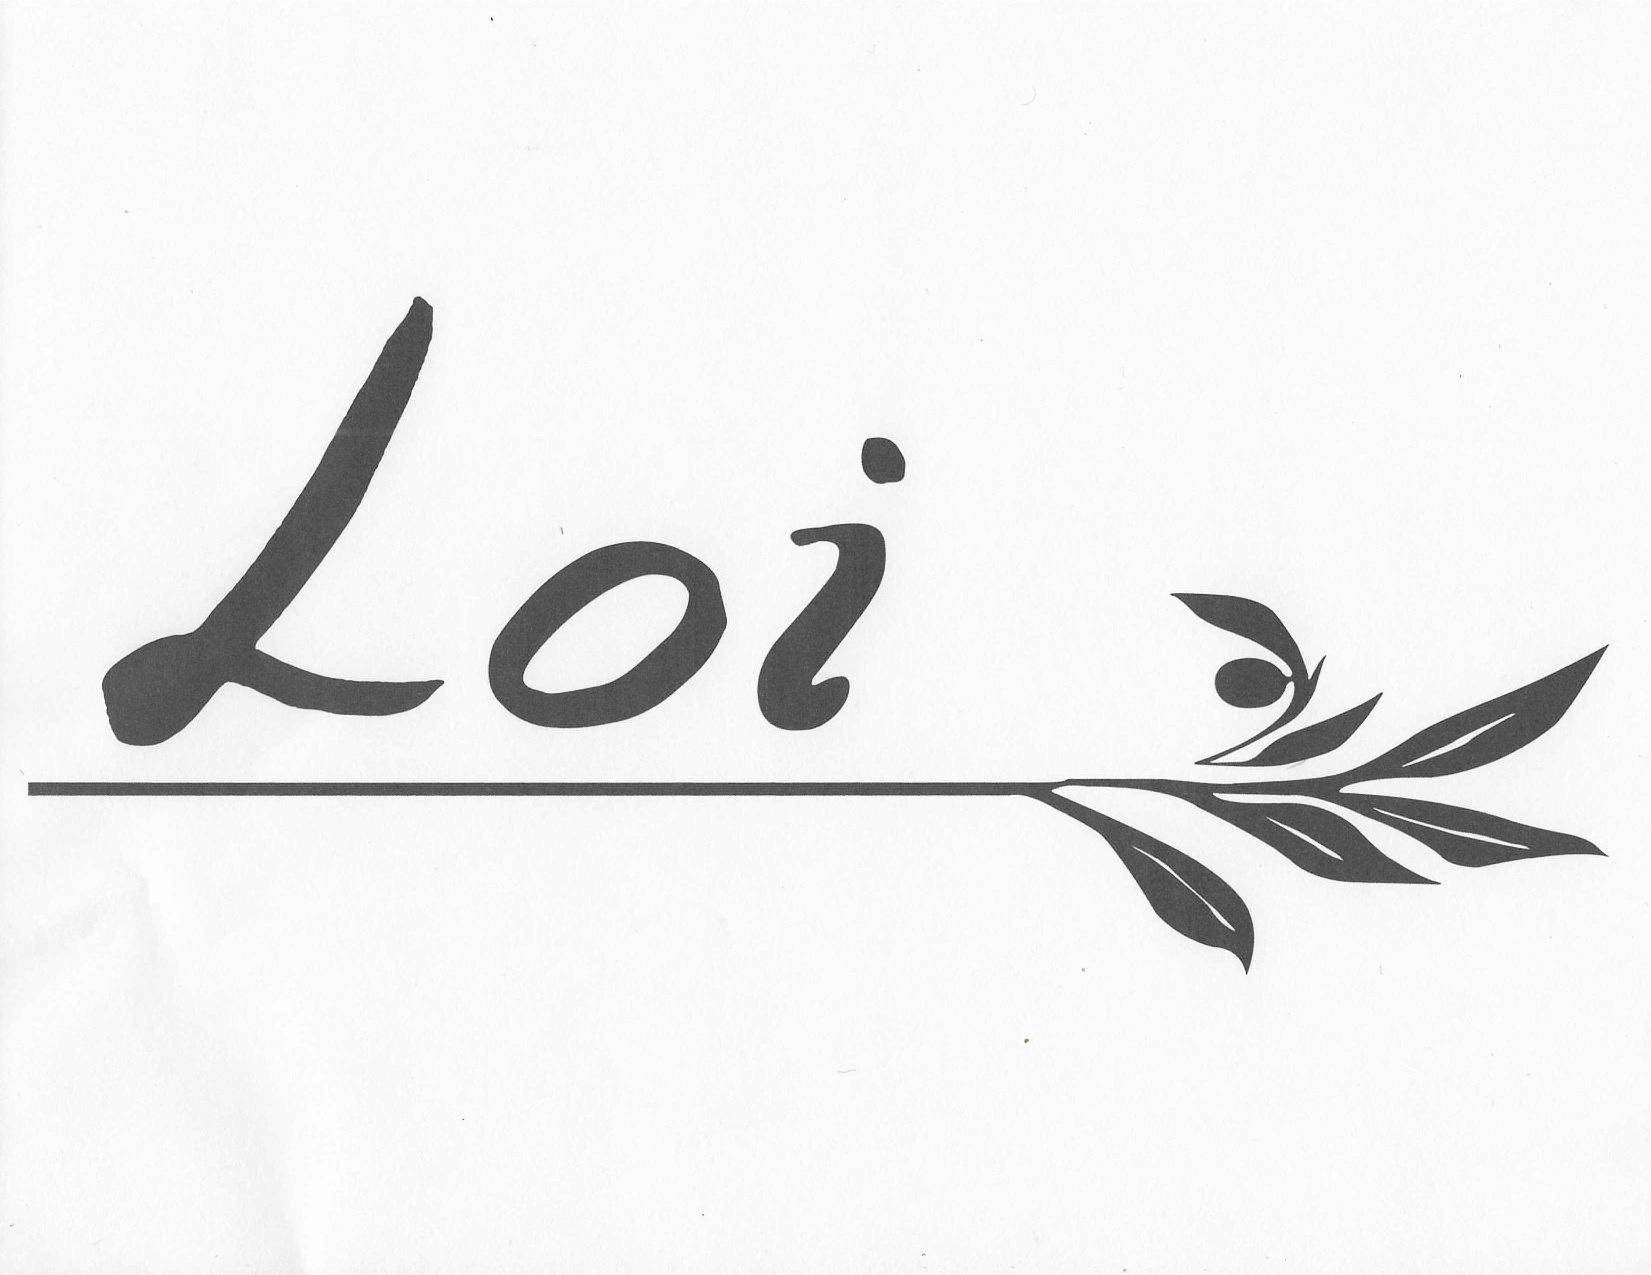 Trademark Logo LOI